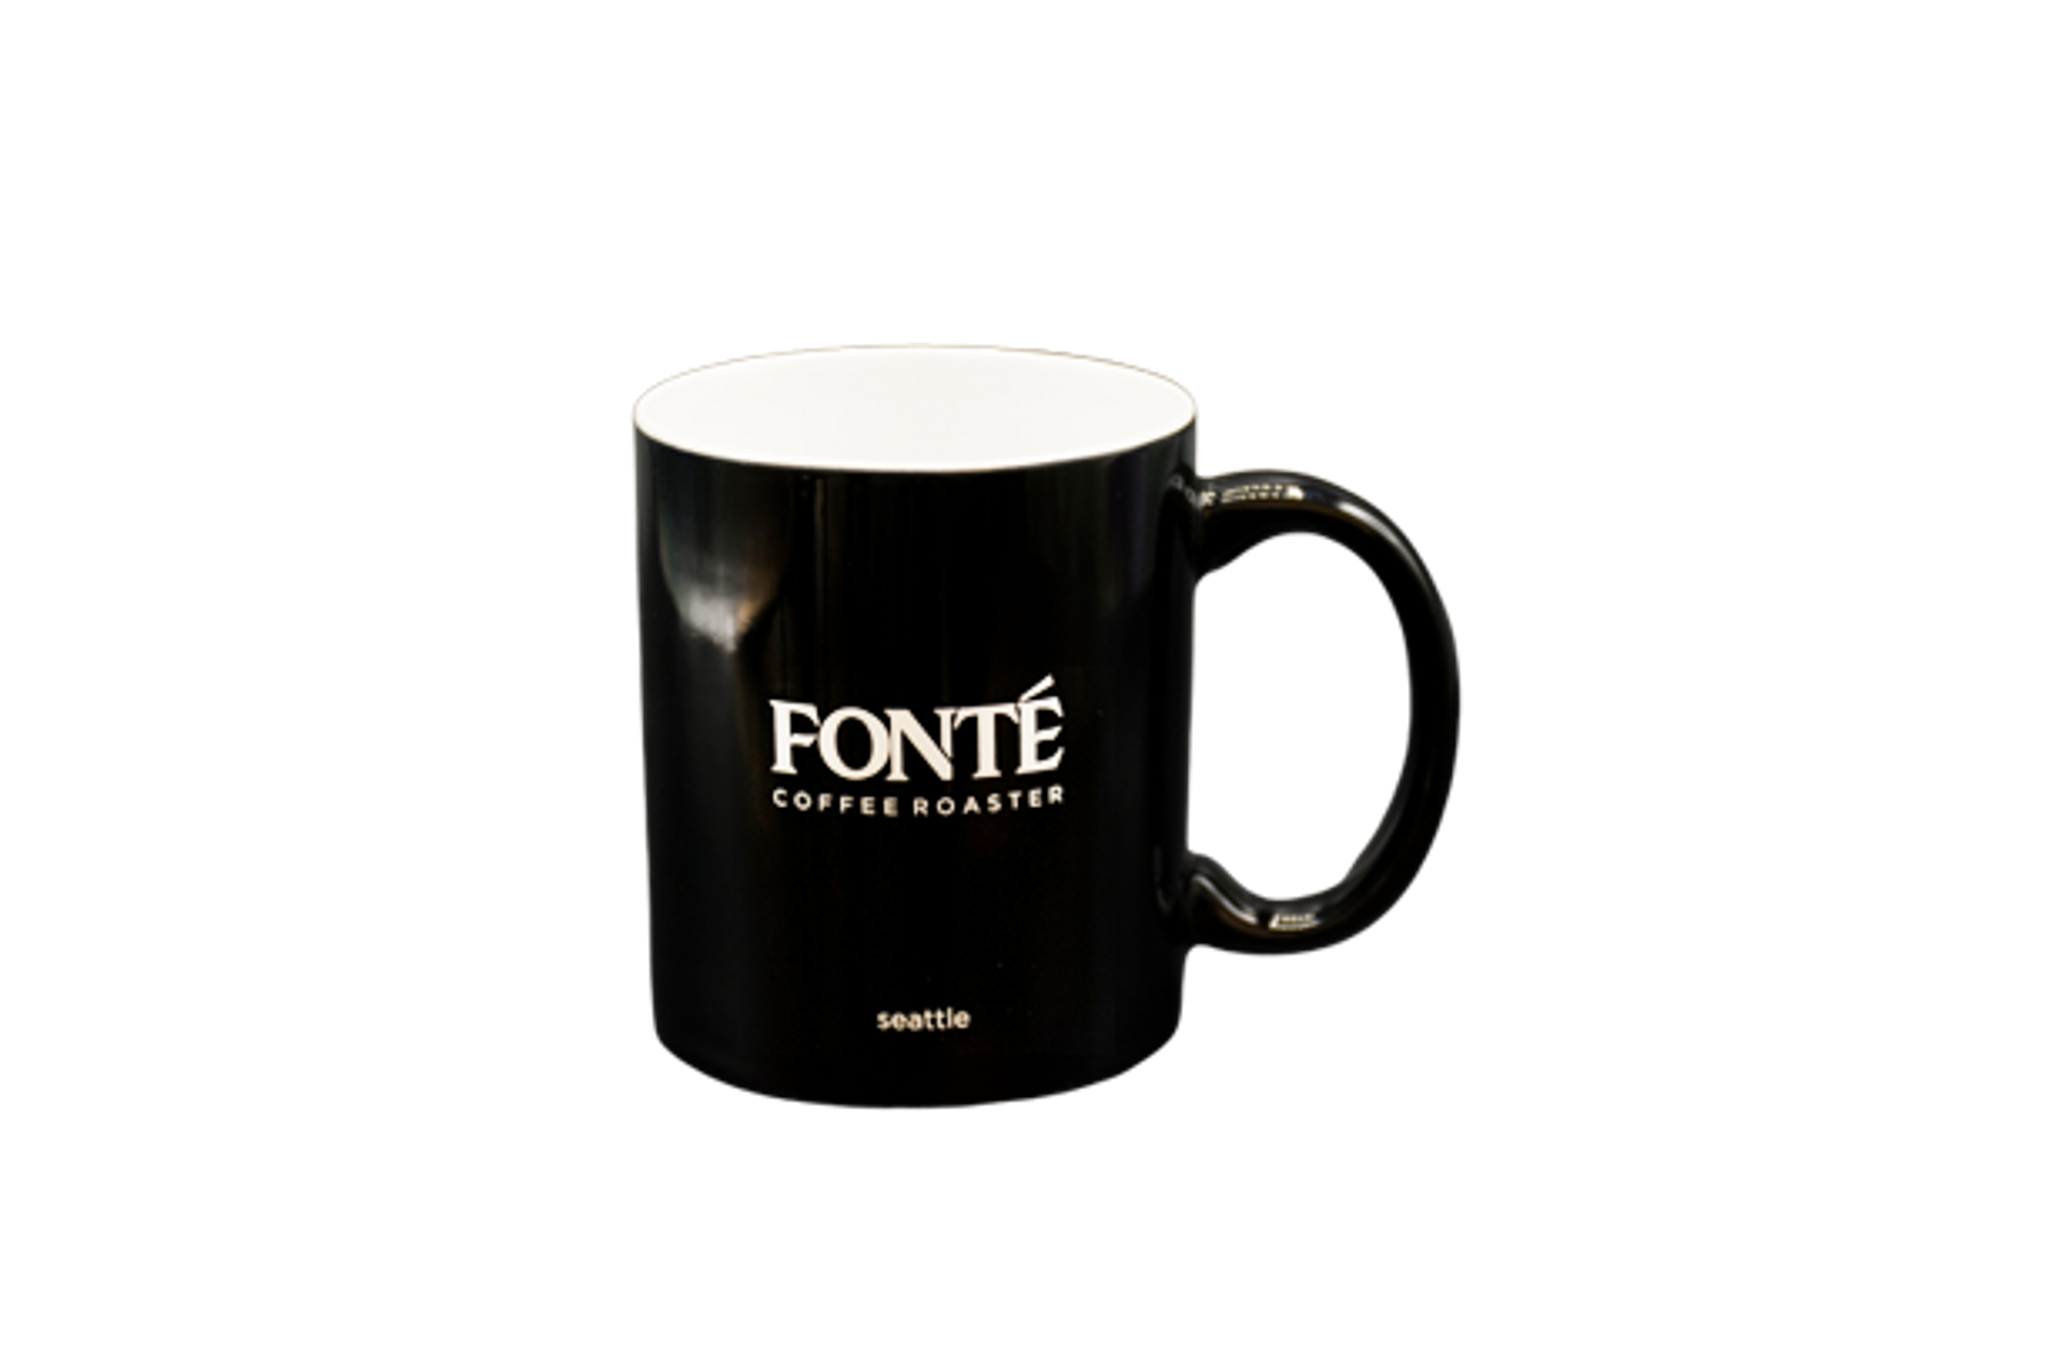 Fonte Coffee Roaster Coffee Mug for your favorite coffee blend.